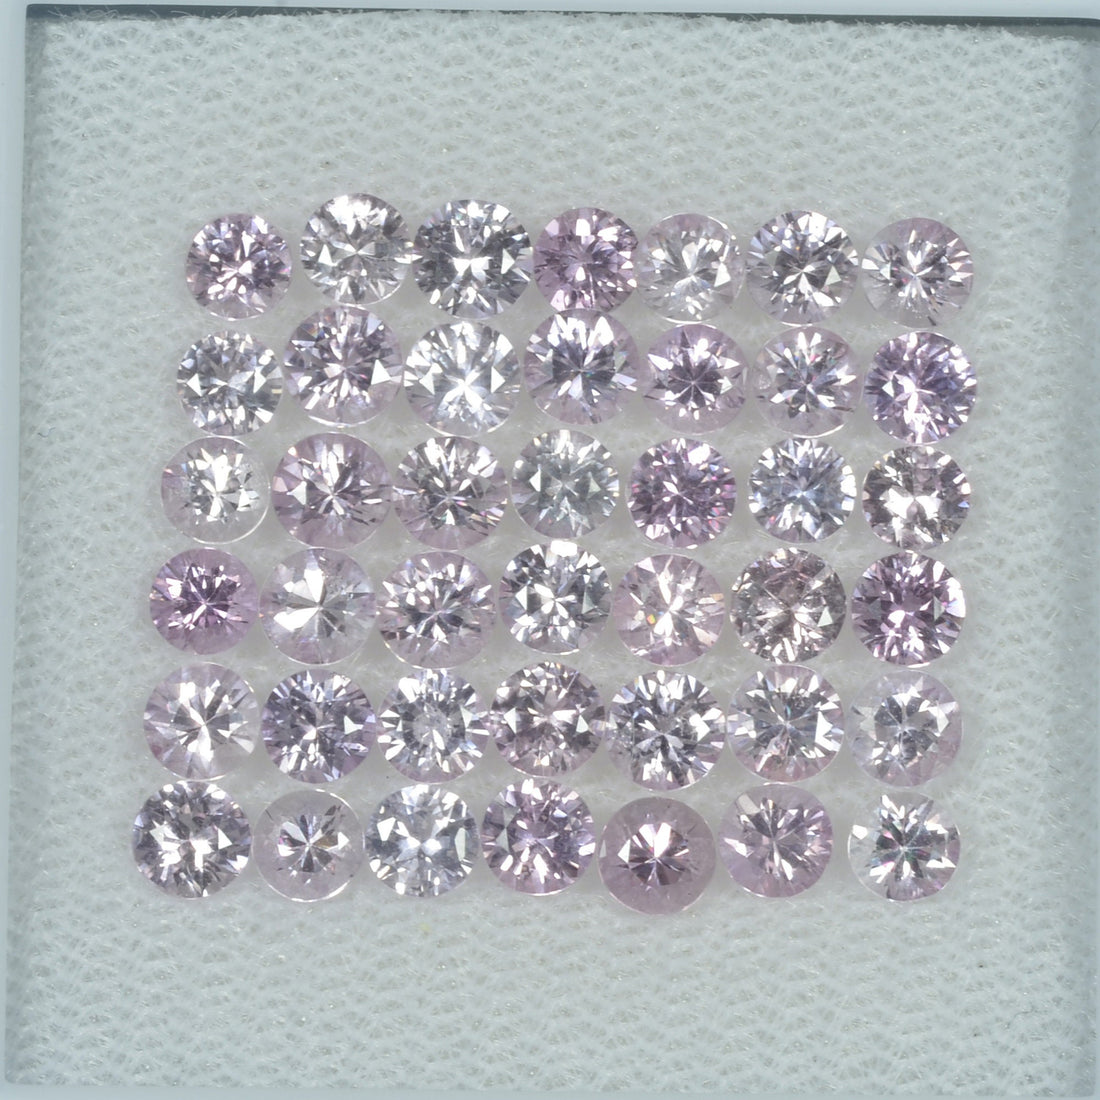 2-4.5 mm Natural Purple Sapphire Loose Gemstone Round Diamond Cut Cleanish Quality